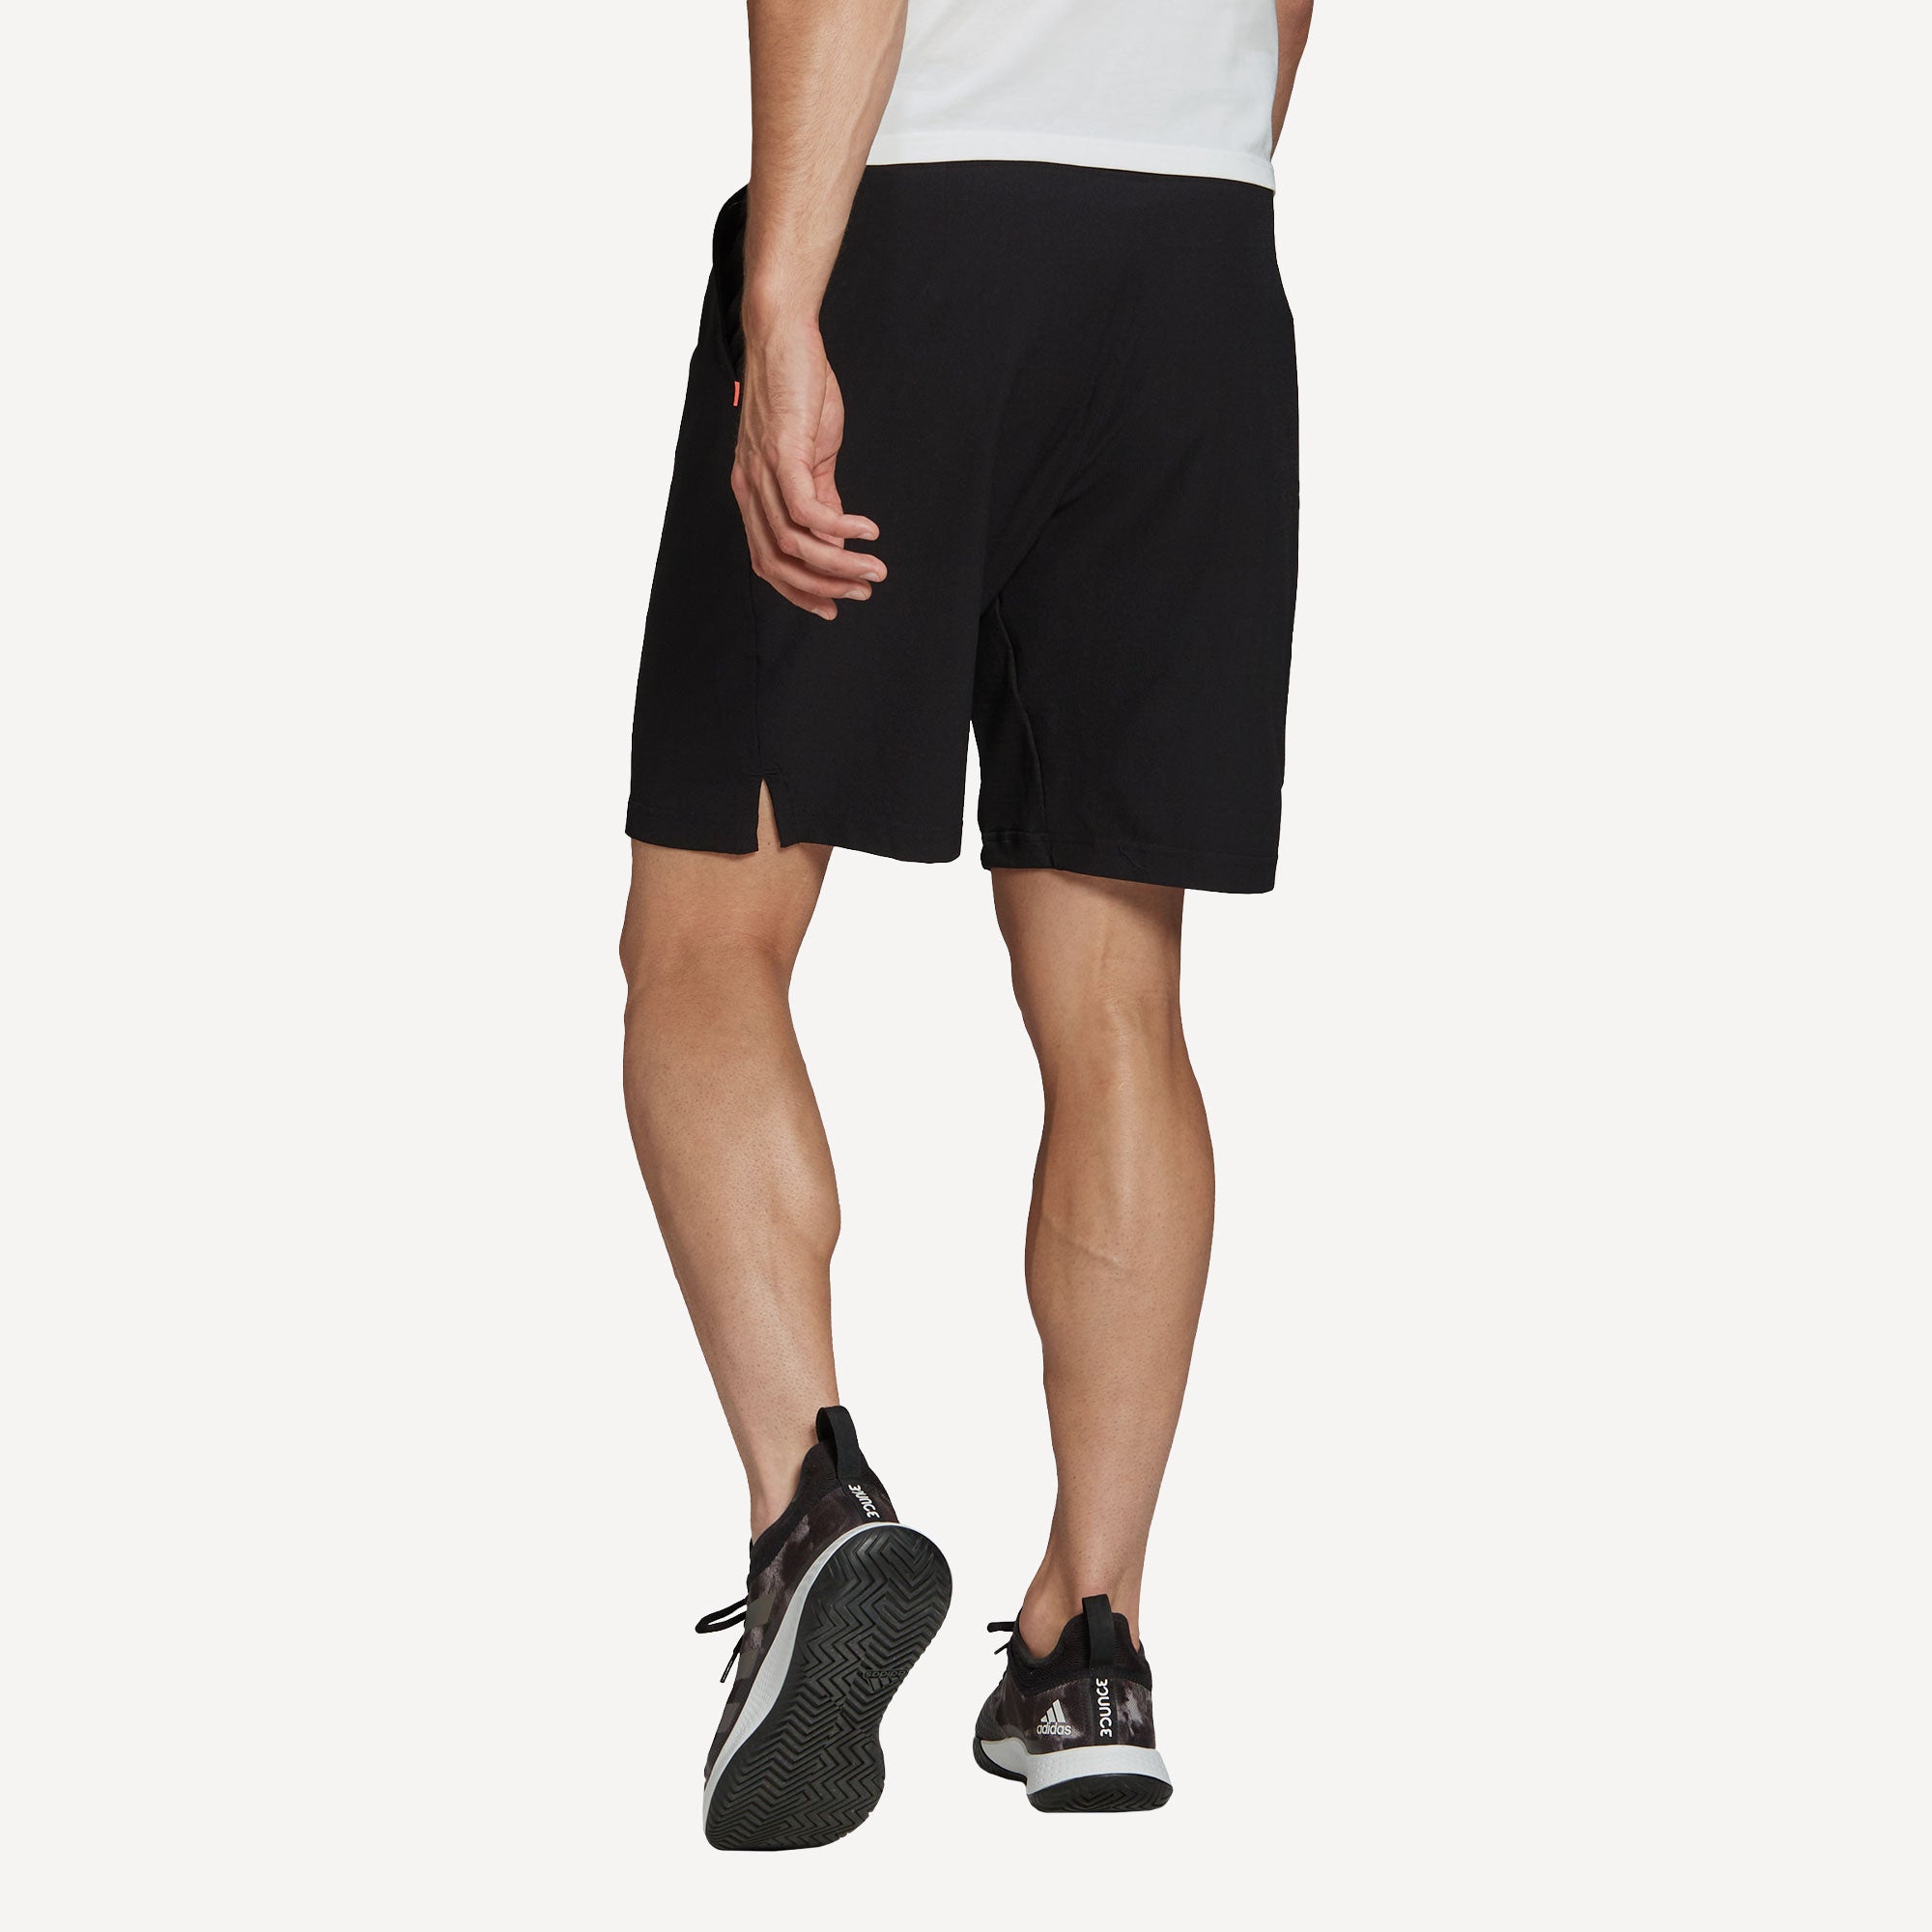 adidas Ergo Men's 9-Inch Tennis Shorts Black (2)